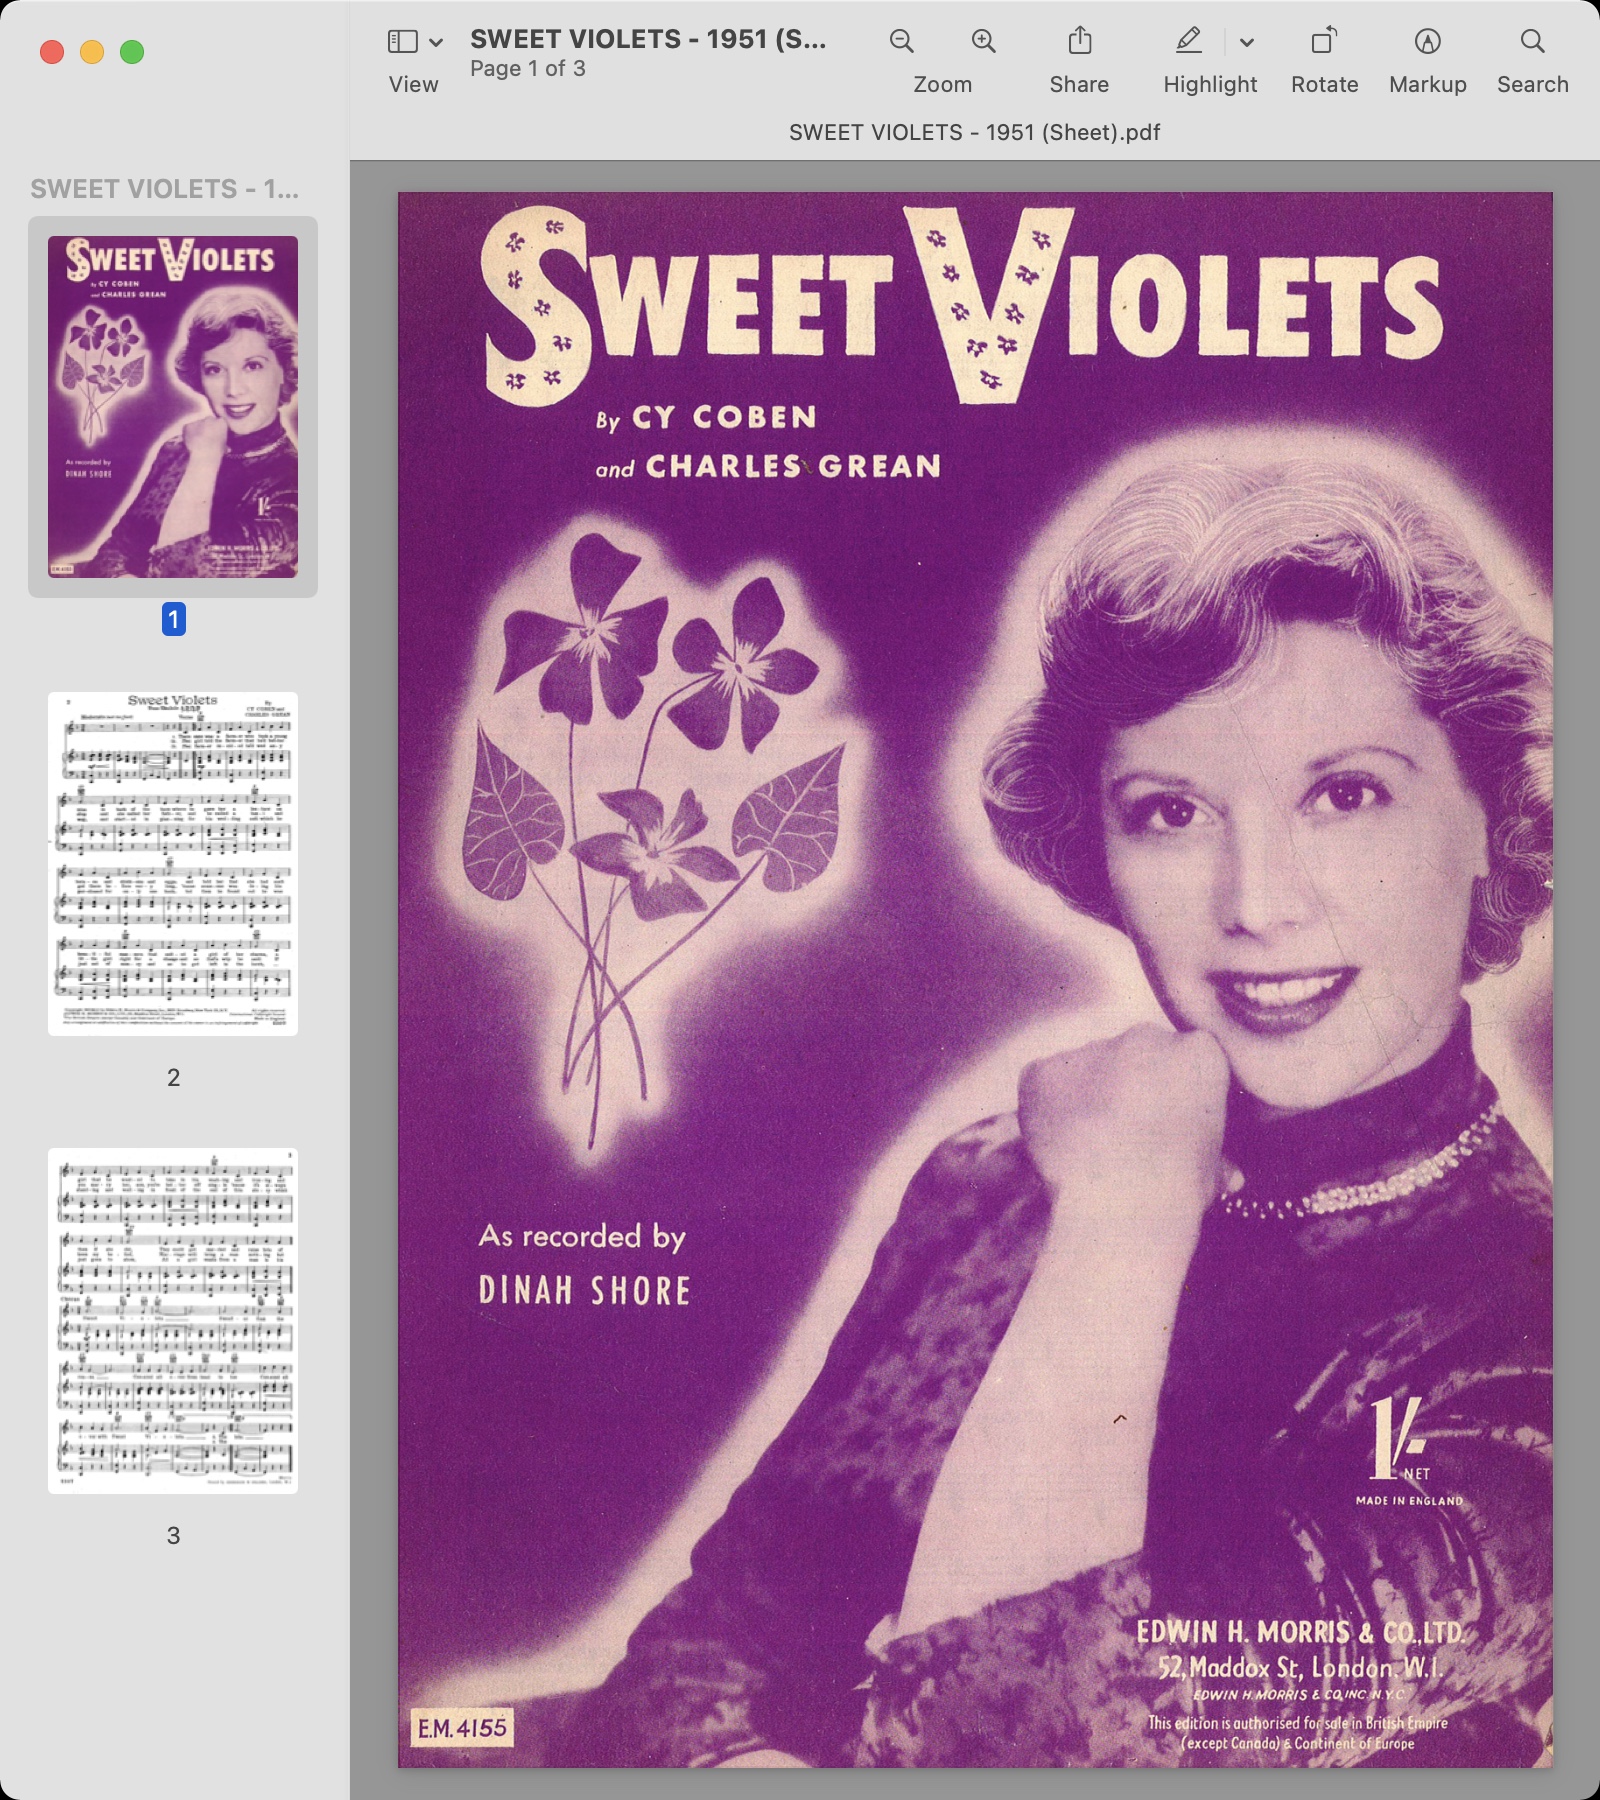 SWEET VIOLETS - 1951 (Sheet).jpg